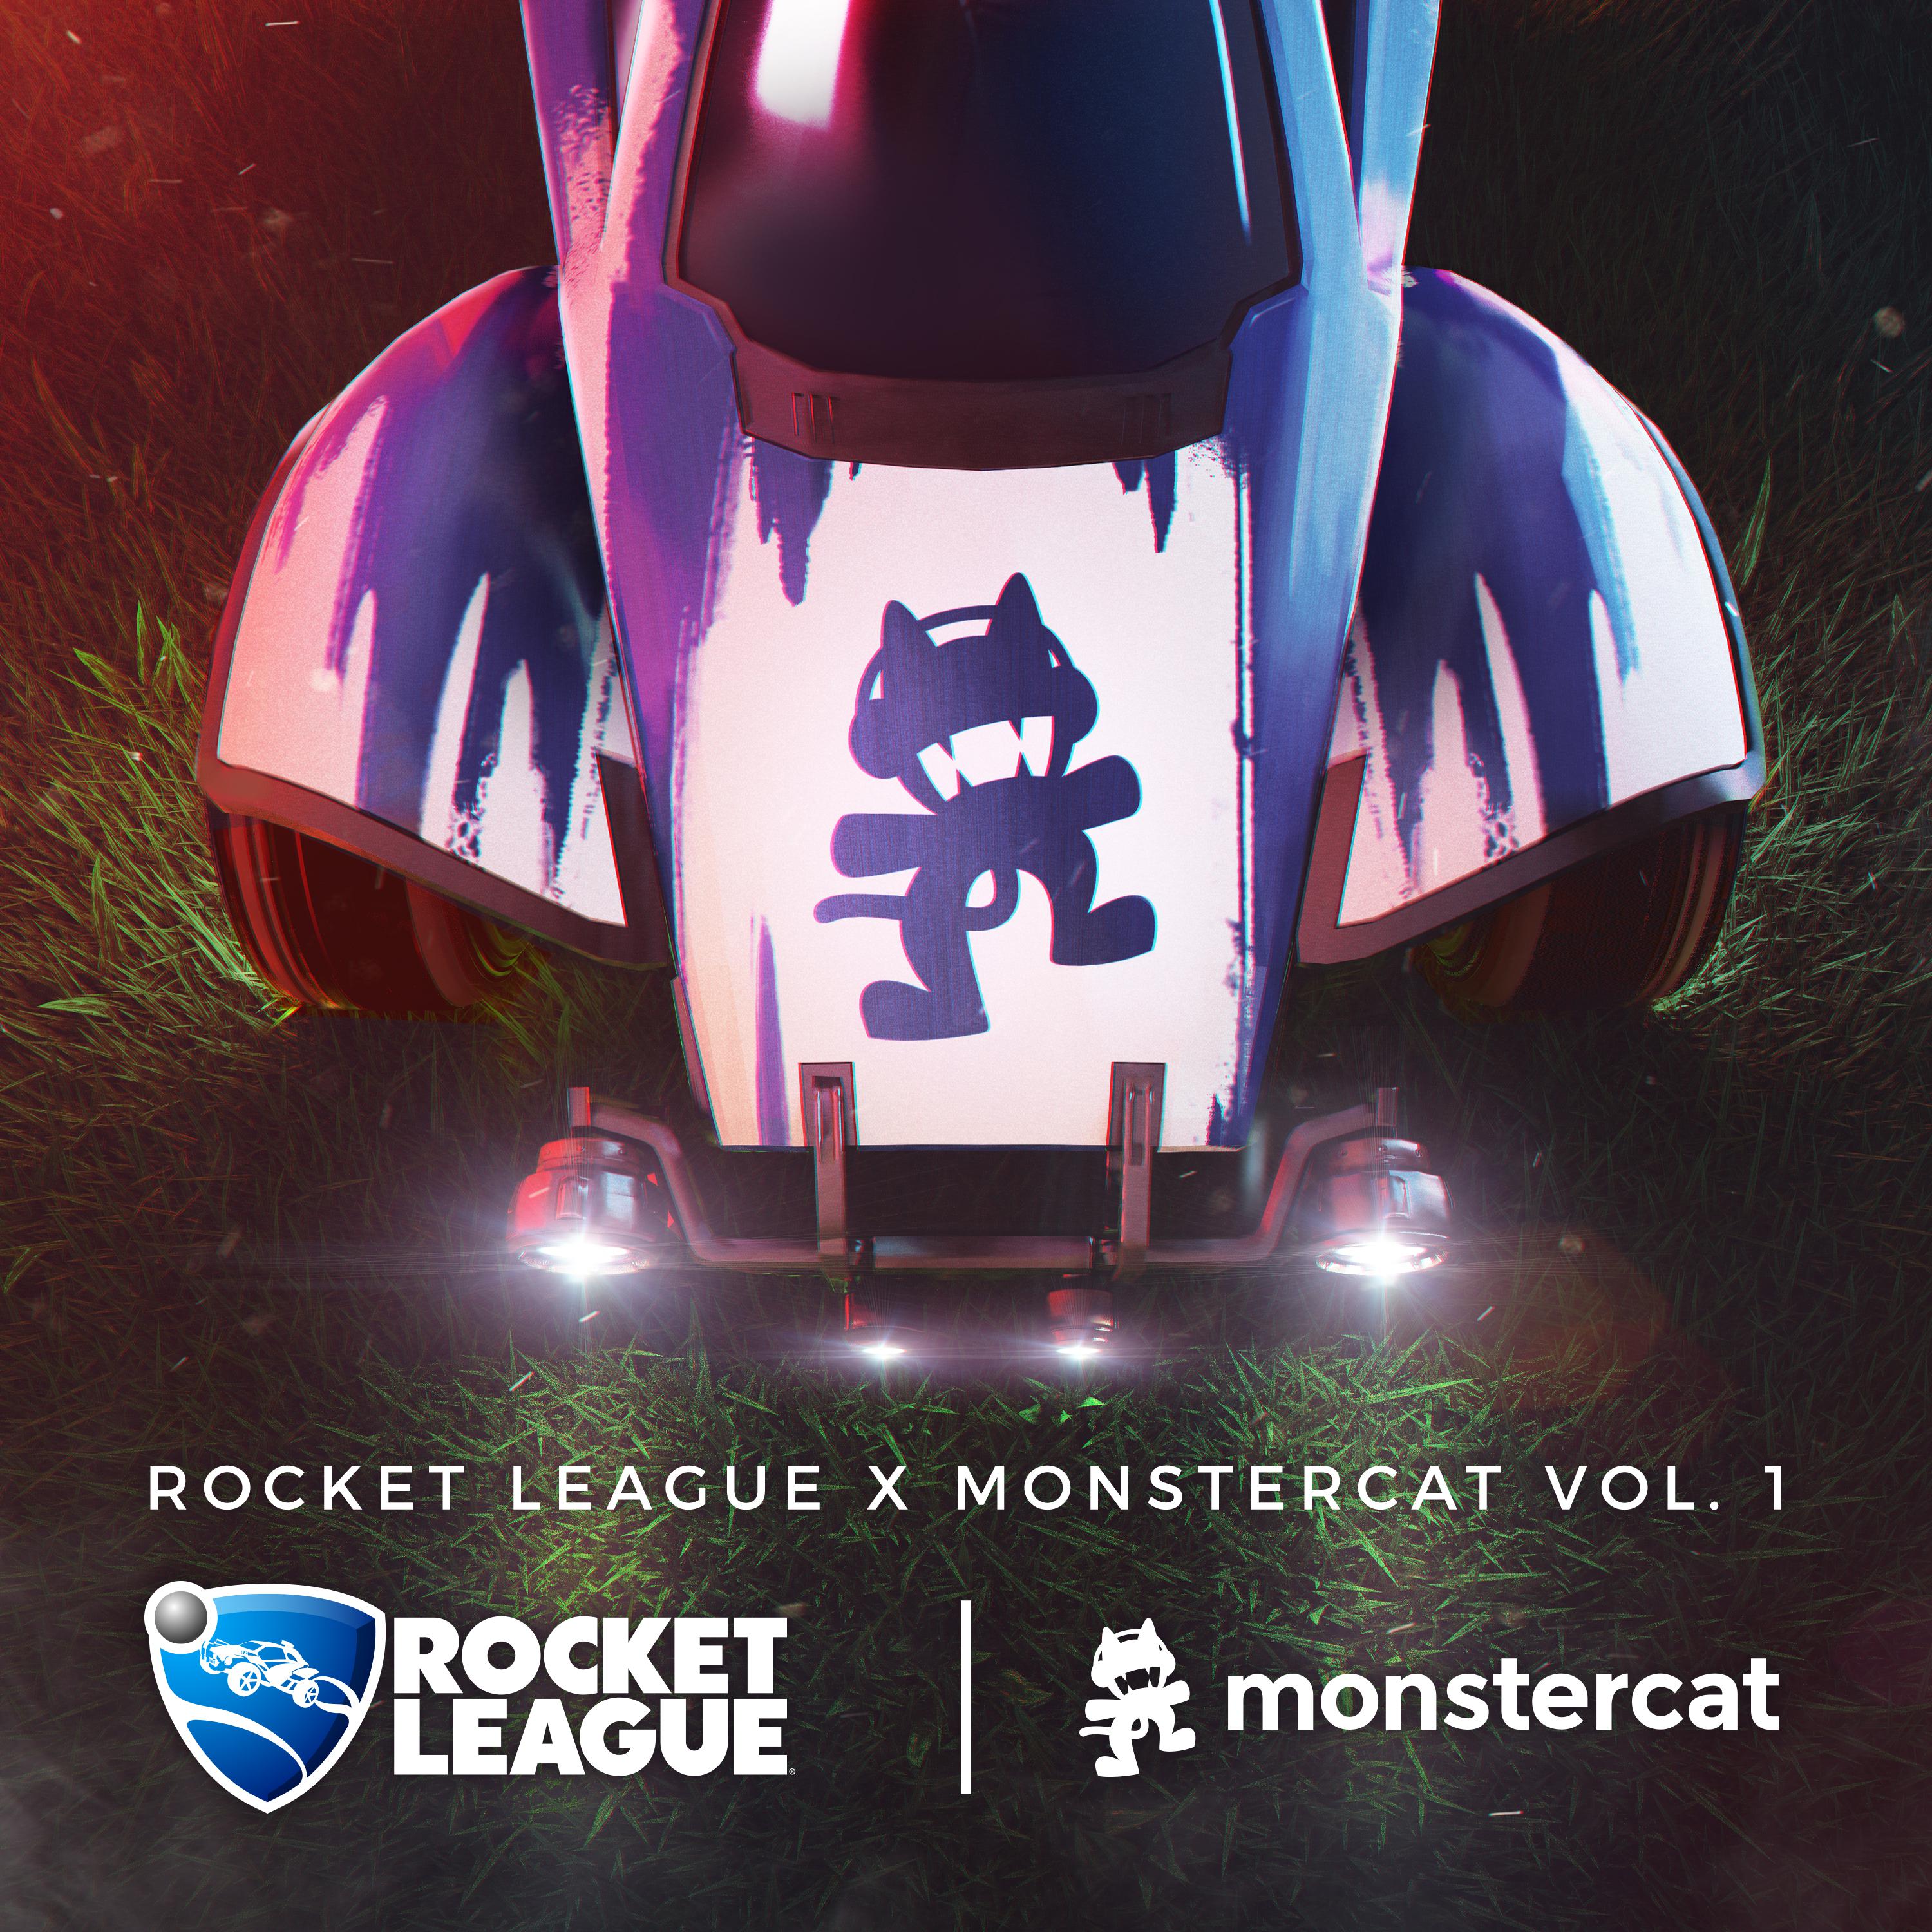 Rocket League x Monstercat Vol. 1